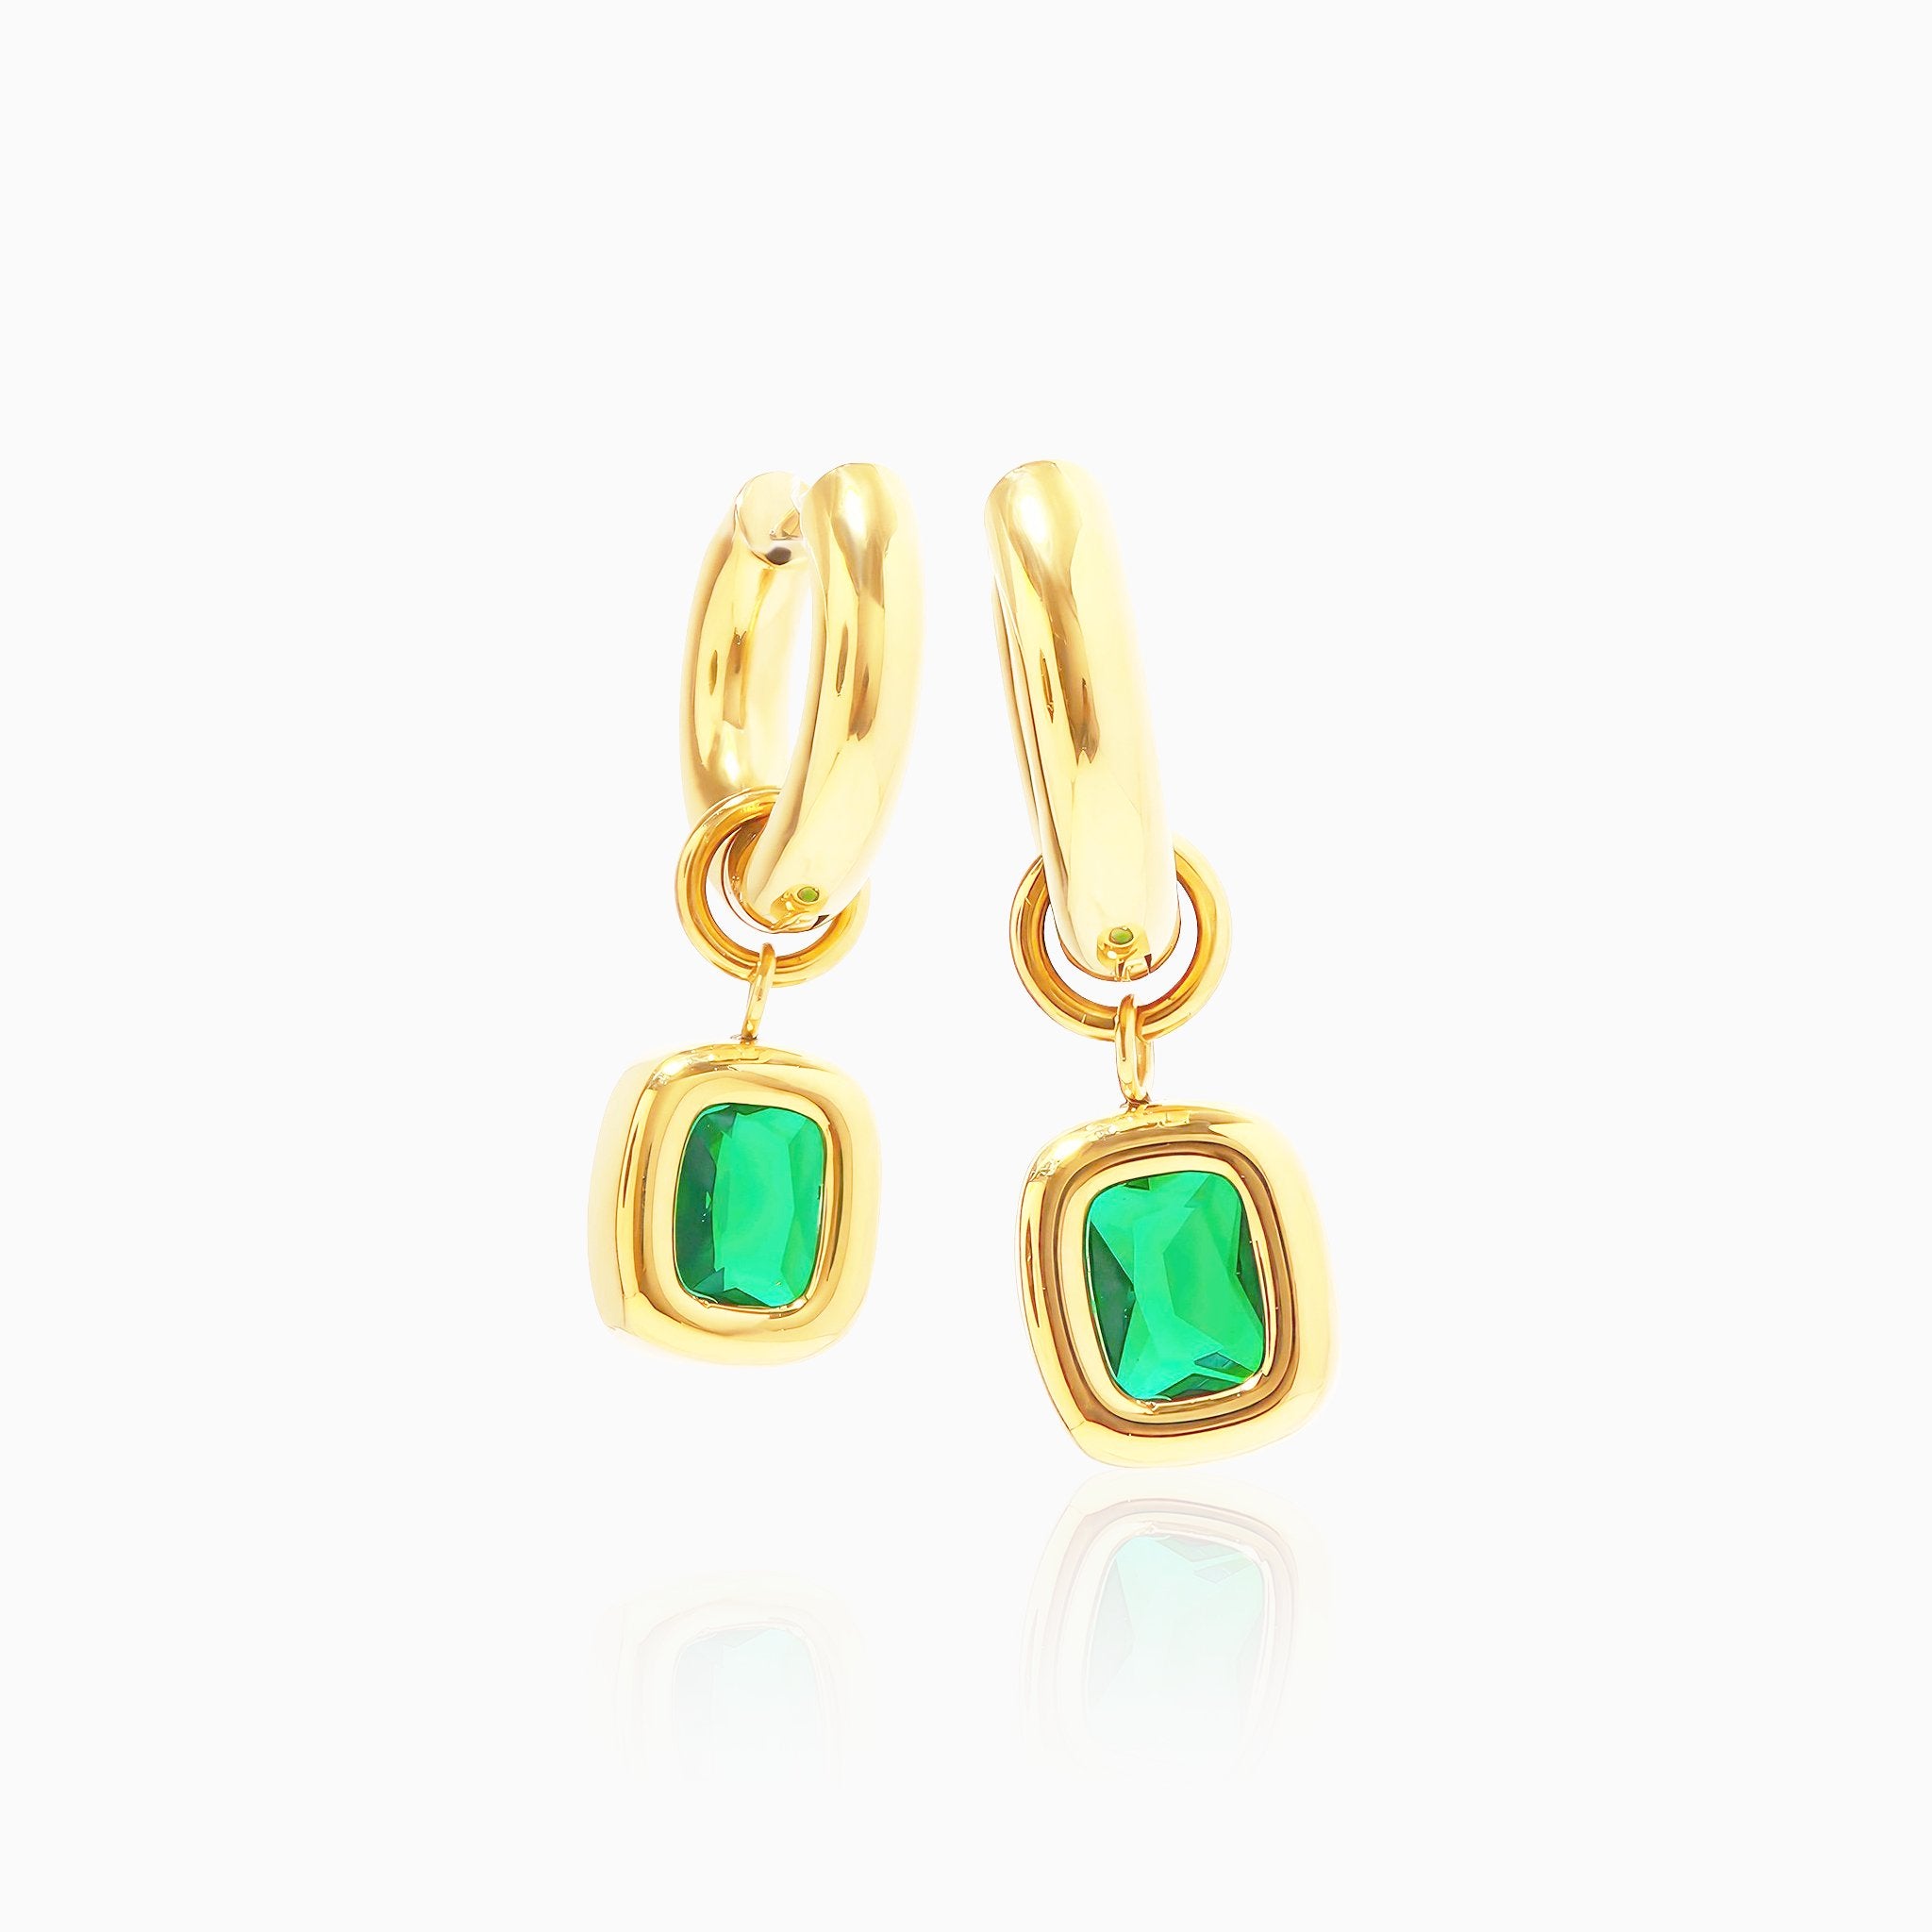 Vintage-Inspired Geometric Drop Earrings - Nobbier - Earrings - 18K Gold And Titanium PVD Coated Jewelry